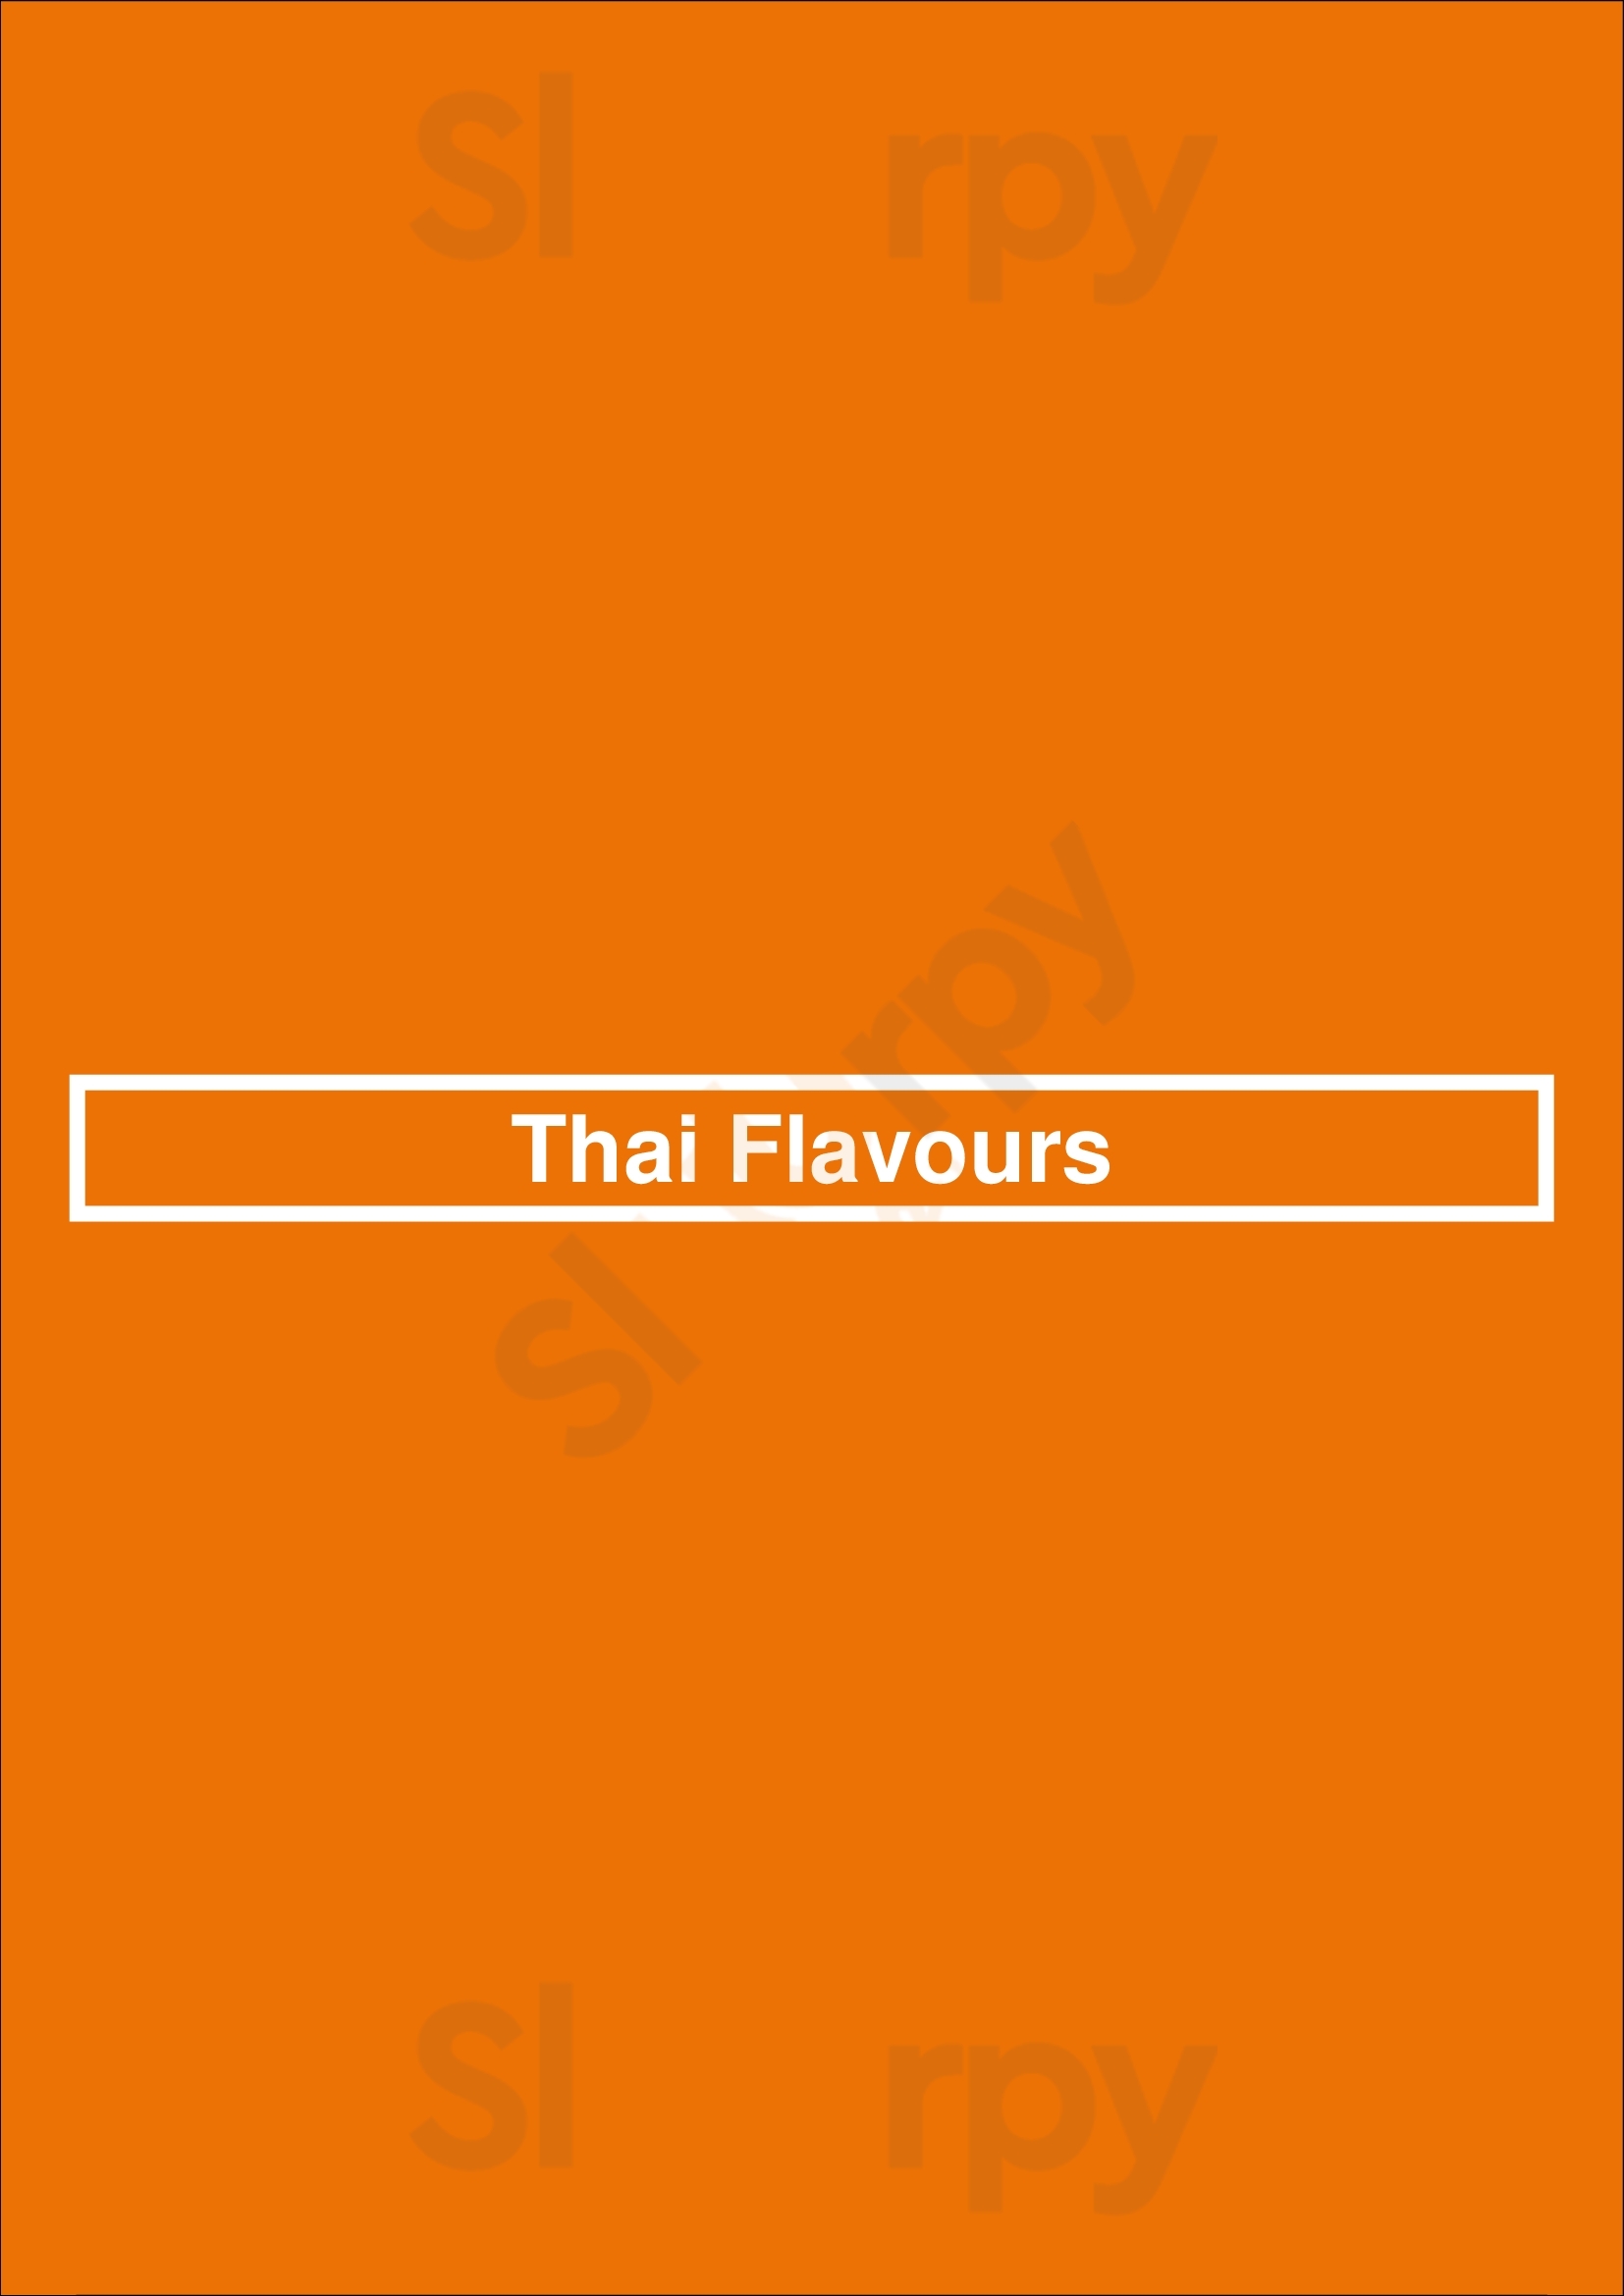 Thai Flavours Edmonton Menu - 1